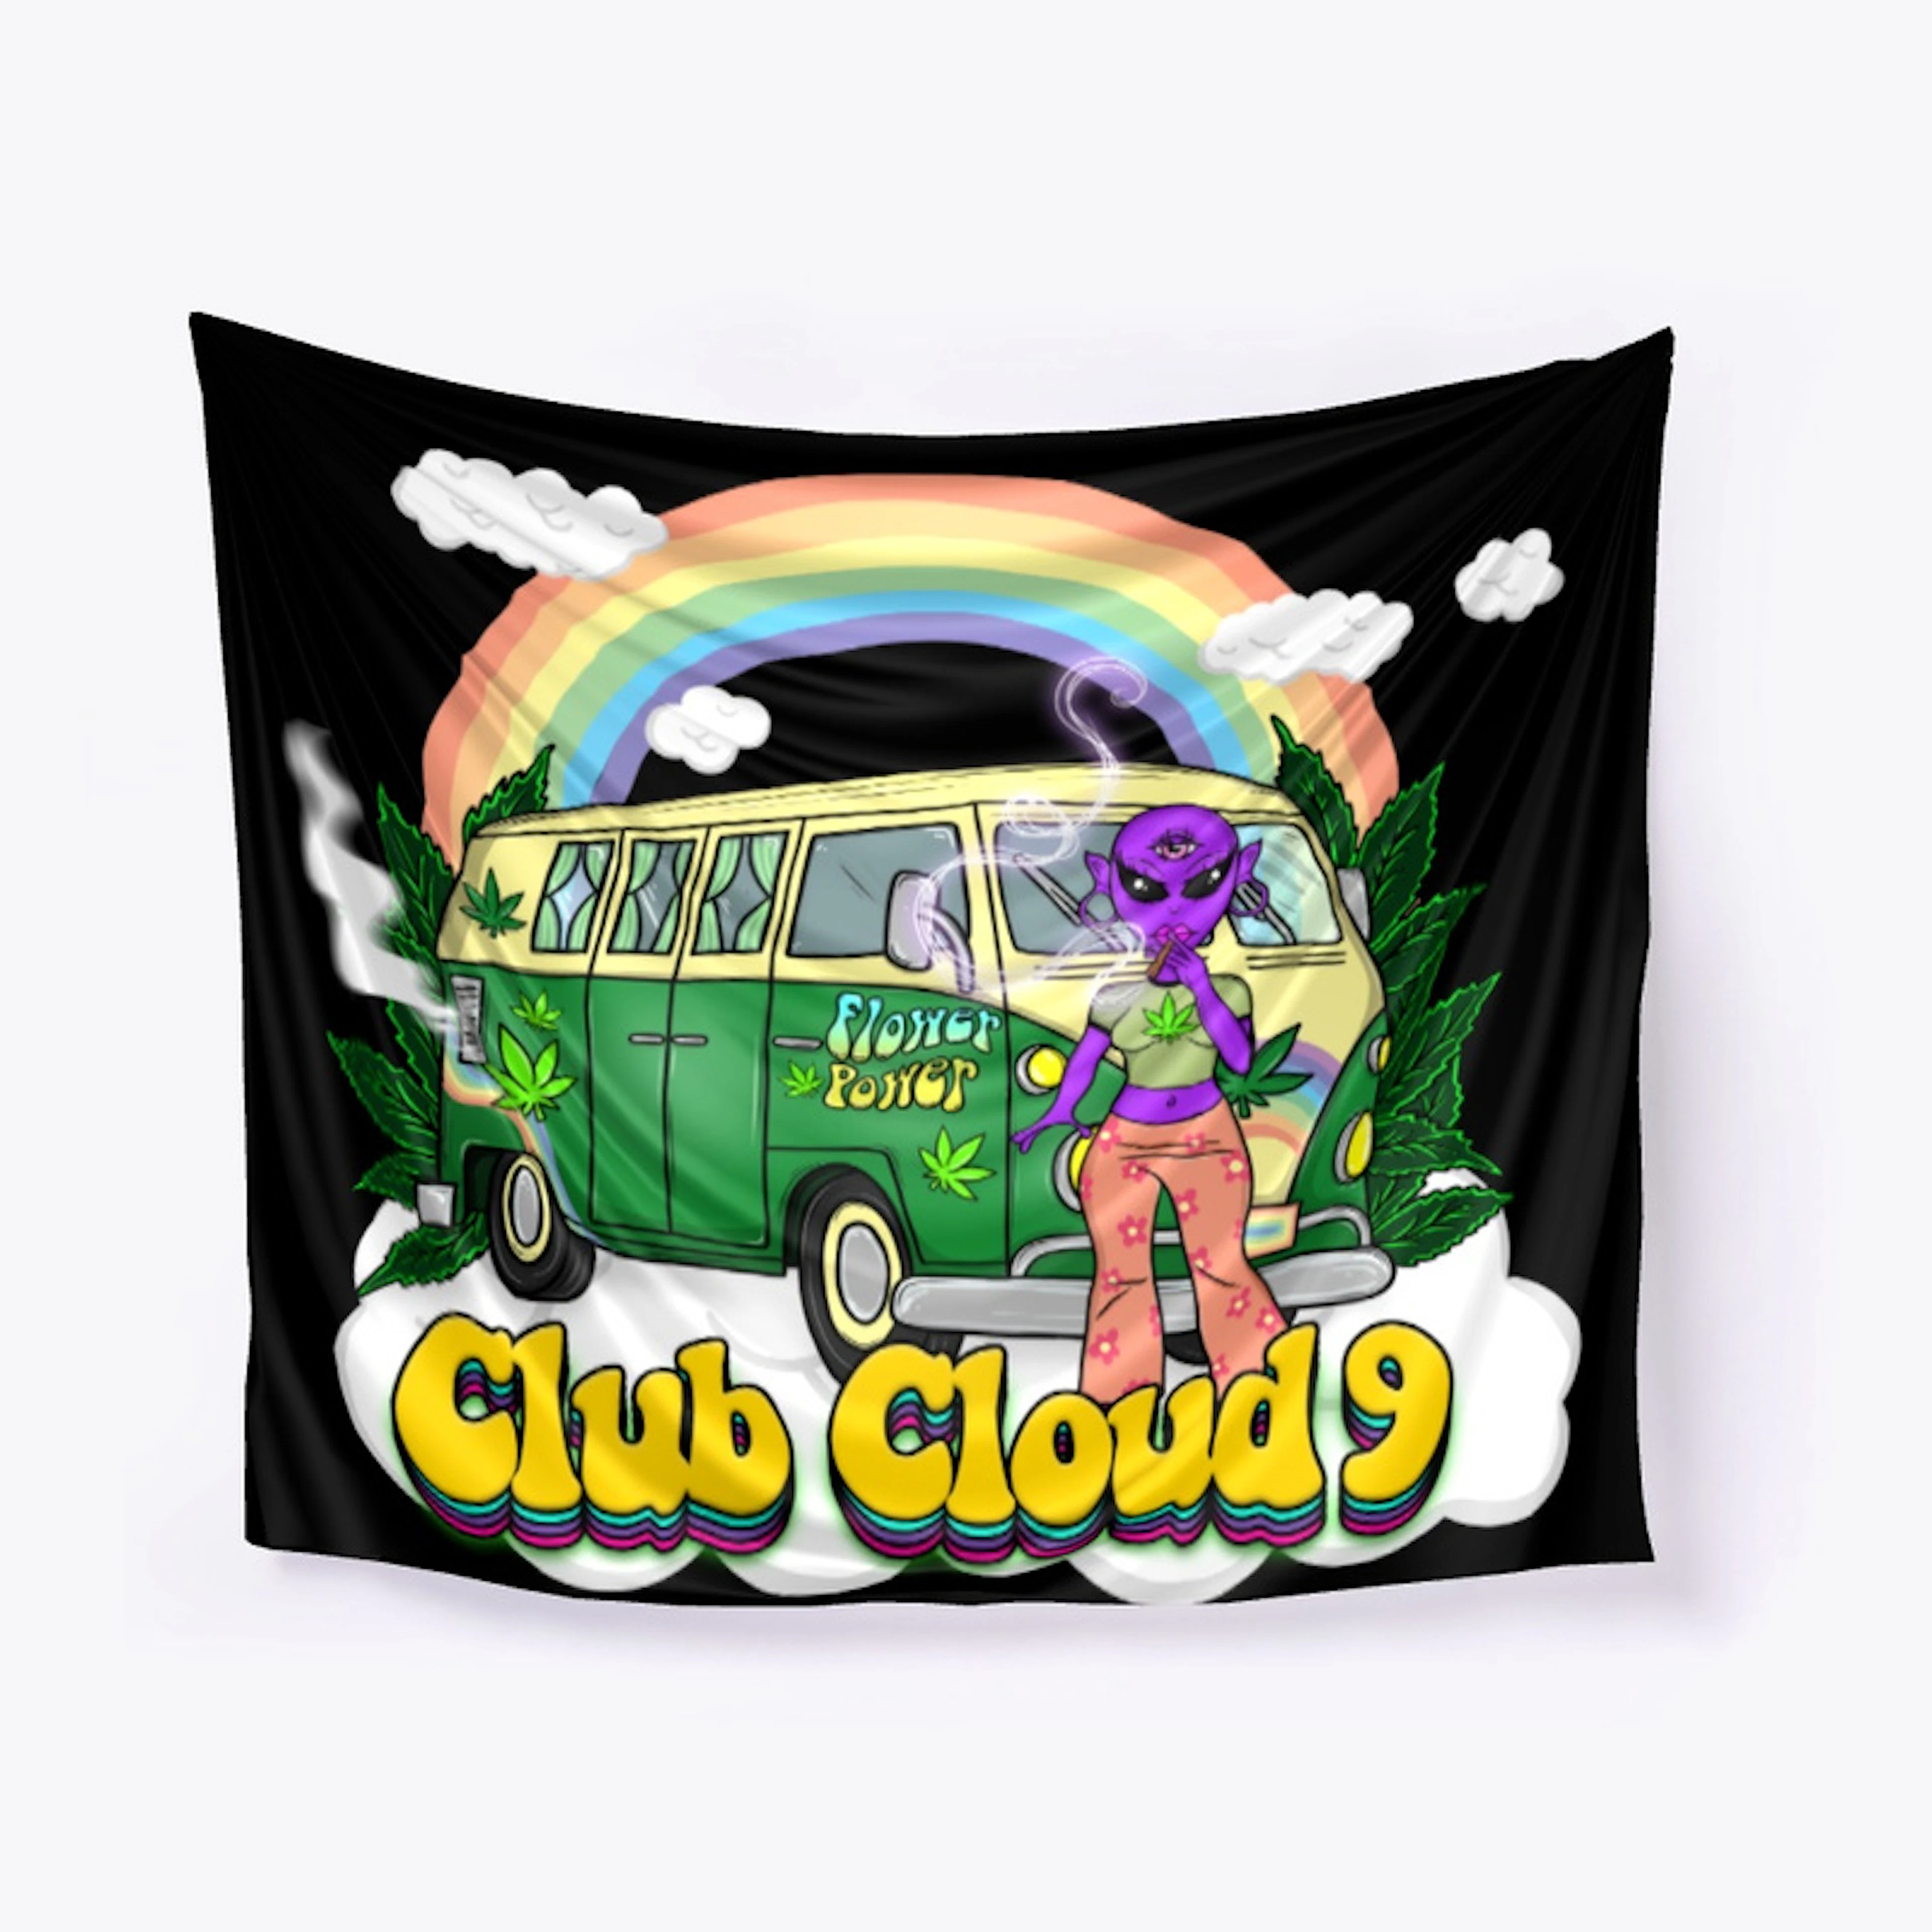 Club Cloud 9